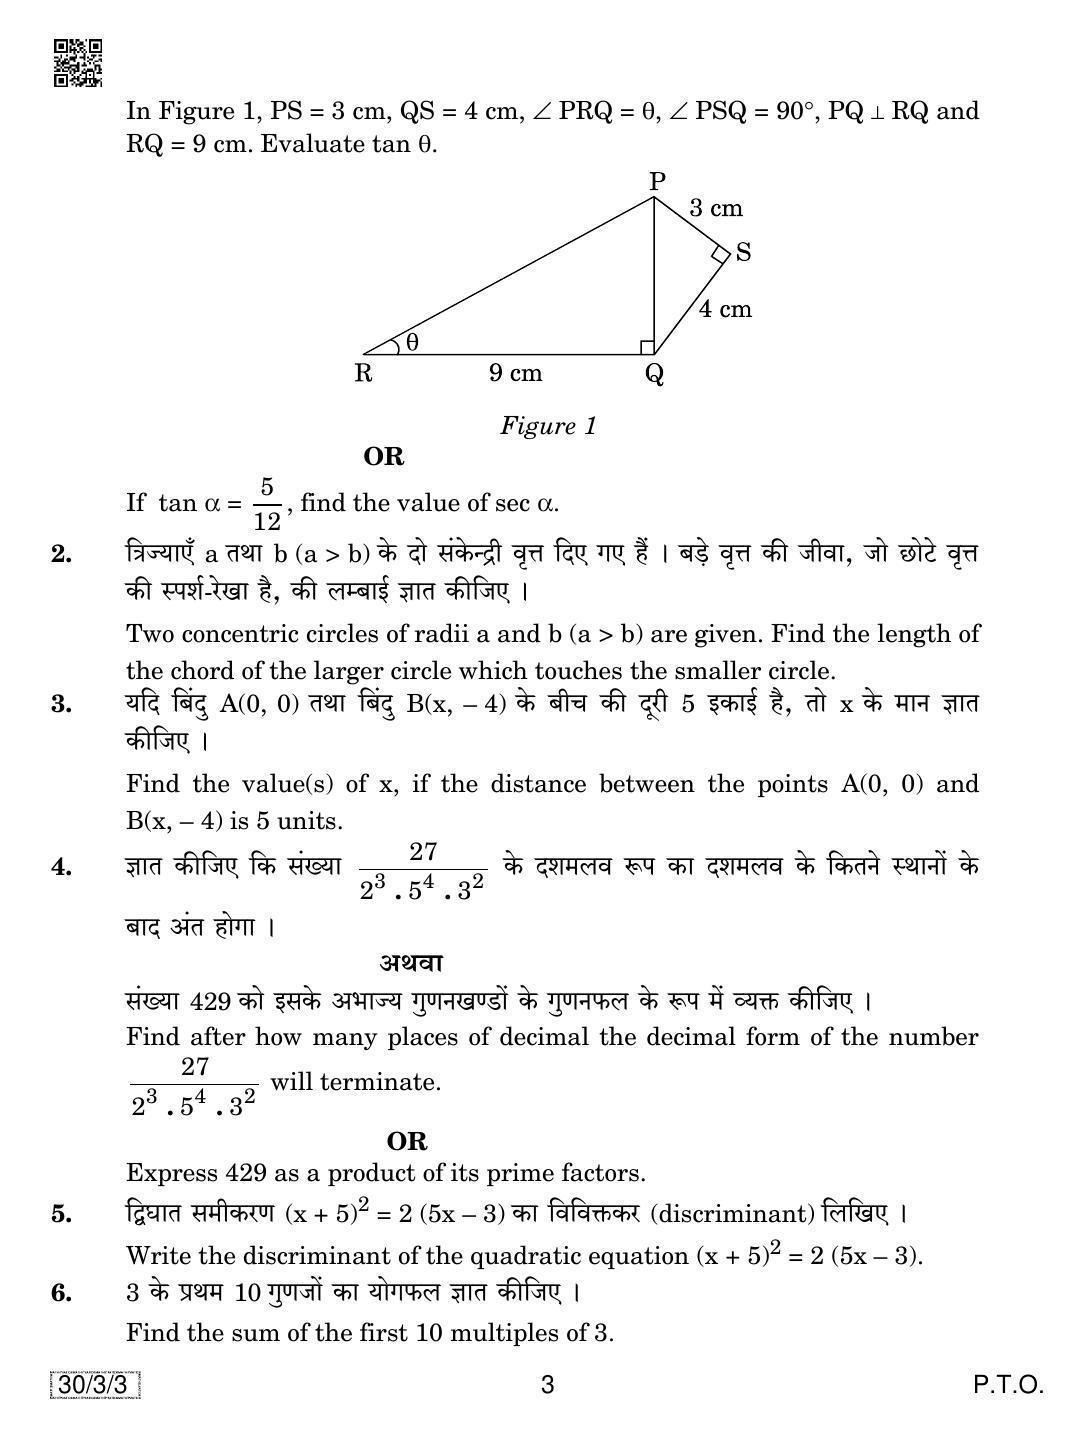 CBSE Class 10 Maths (30/3/3 - SET 3) 2019 Question Paper - Page 3